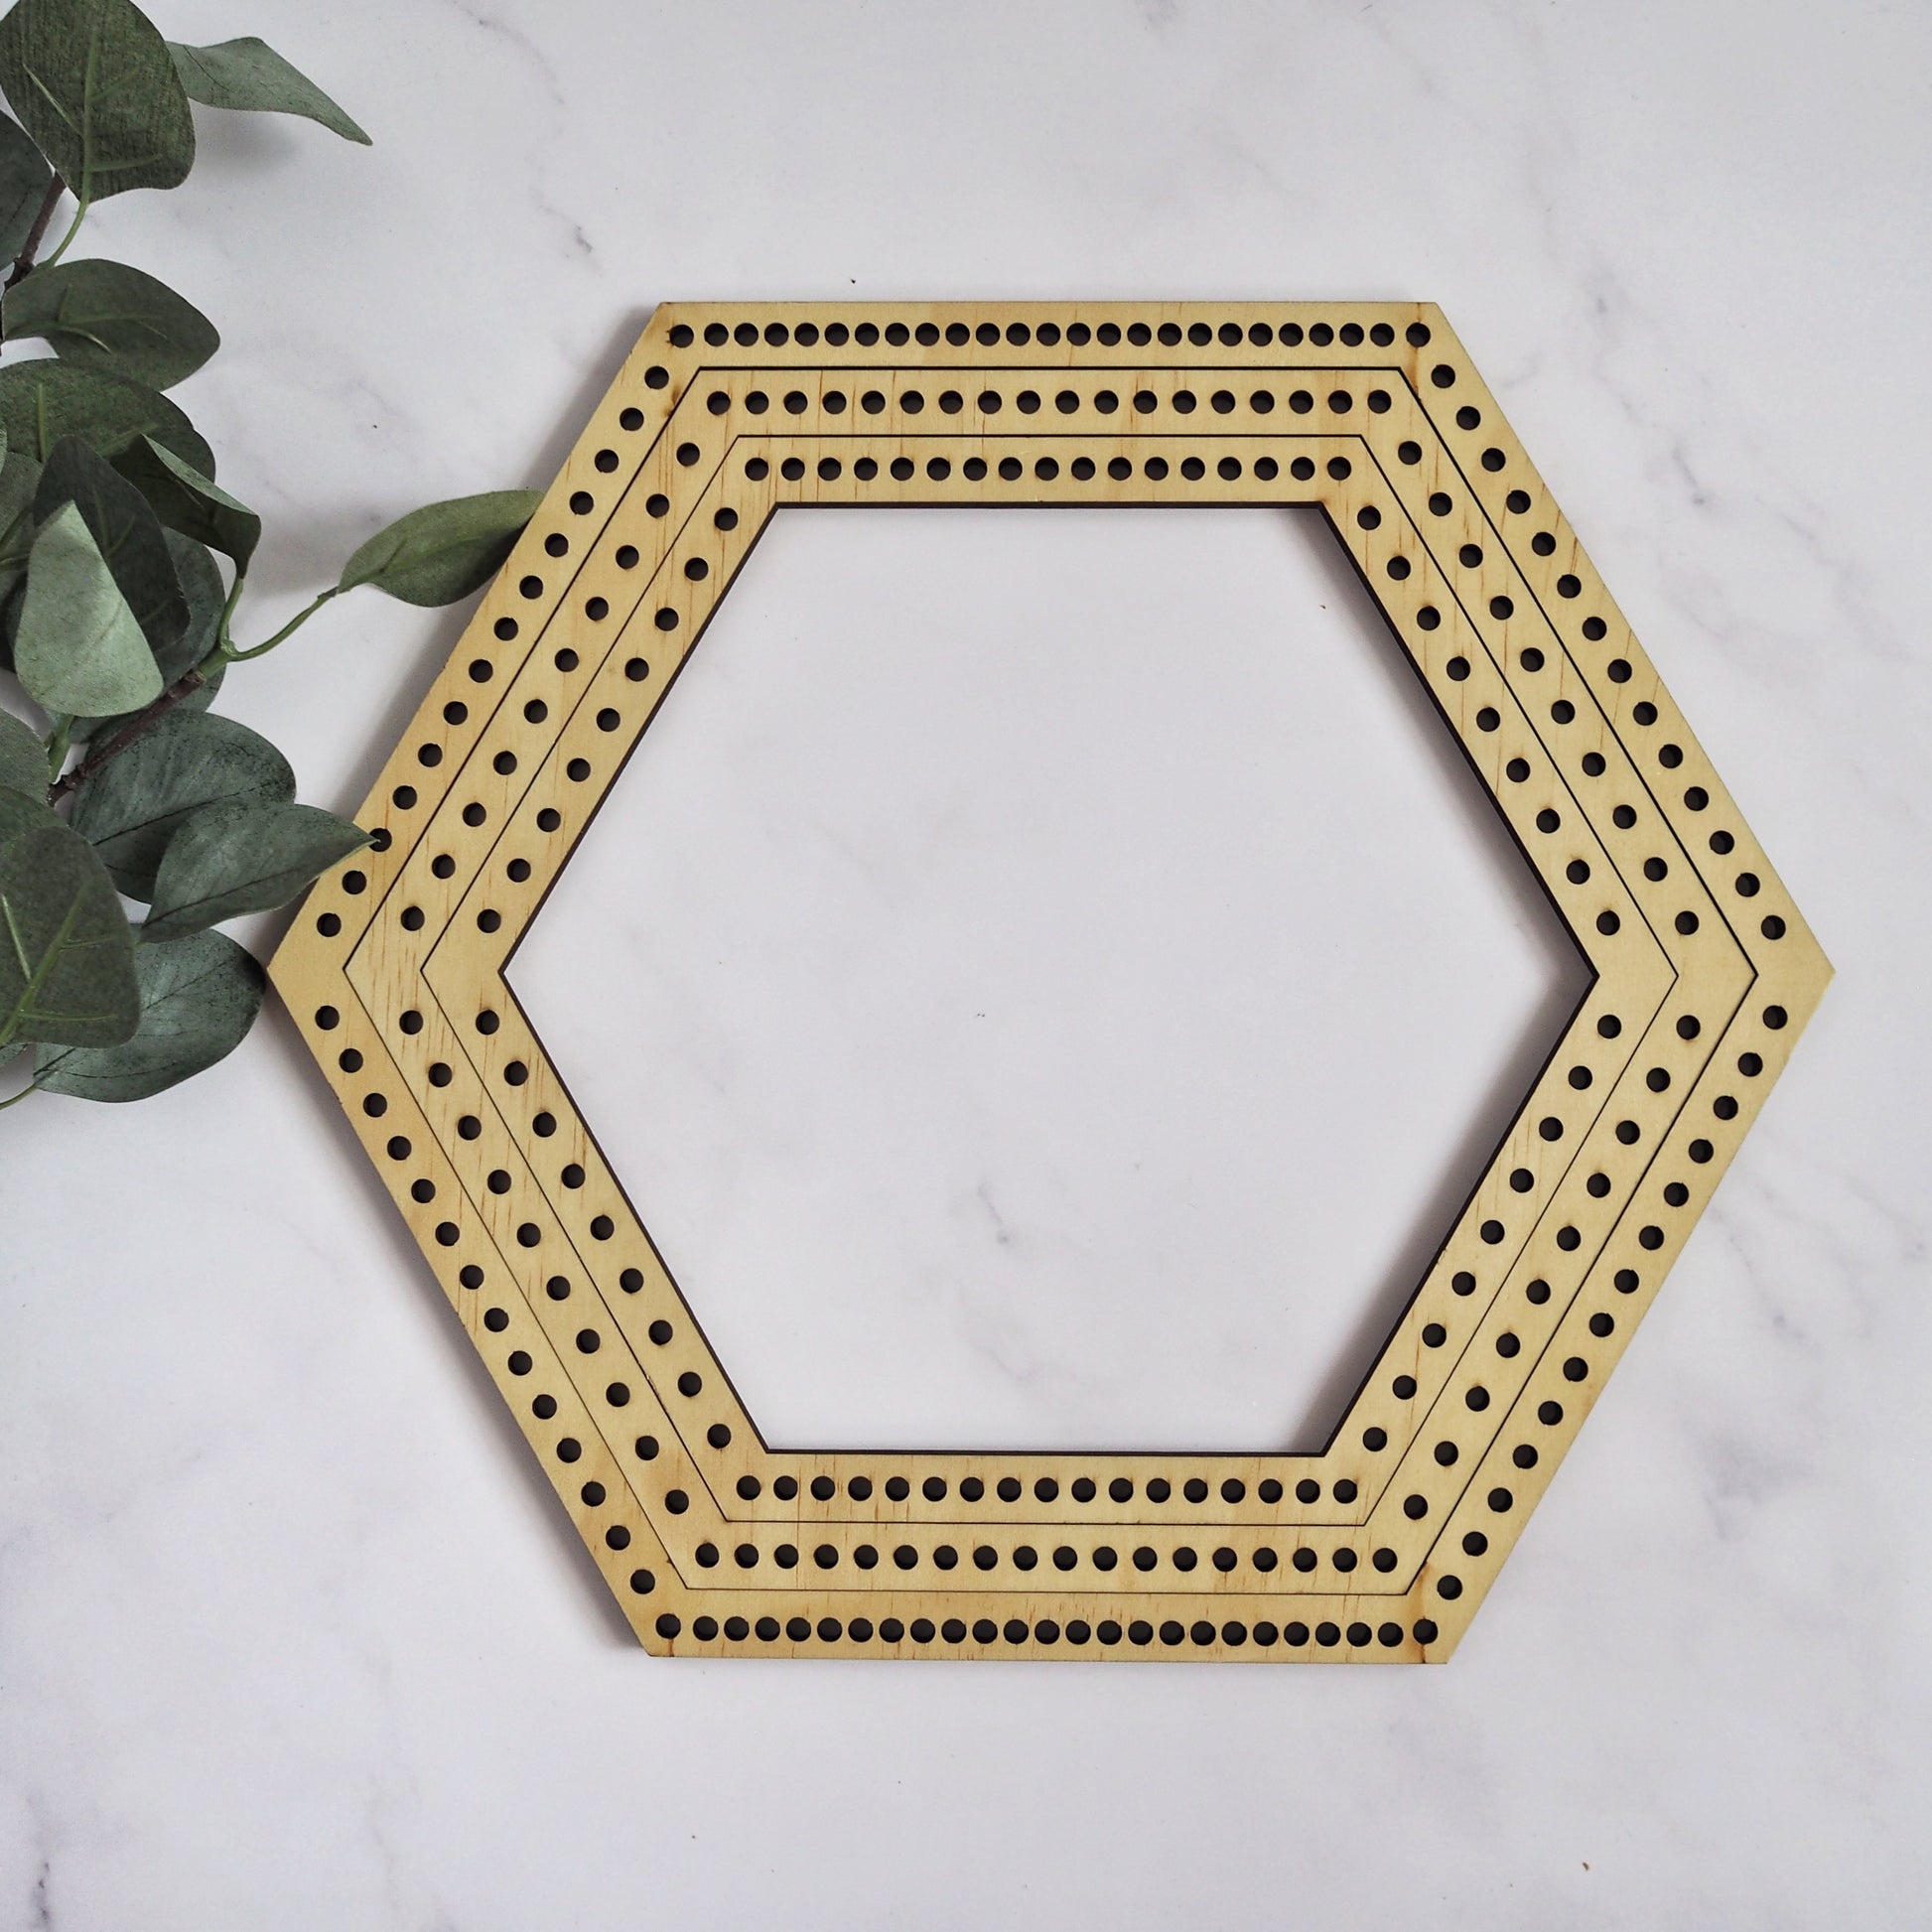 Hexagon Weaving Looms - 3 Sizes The Joyful Studio